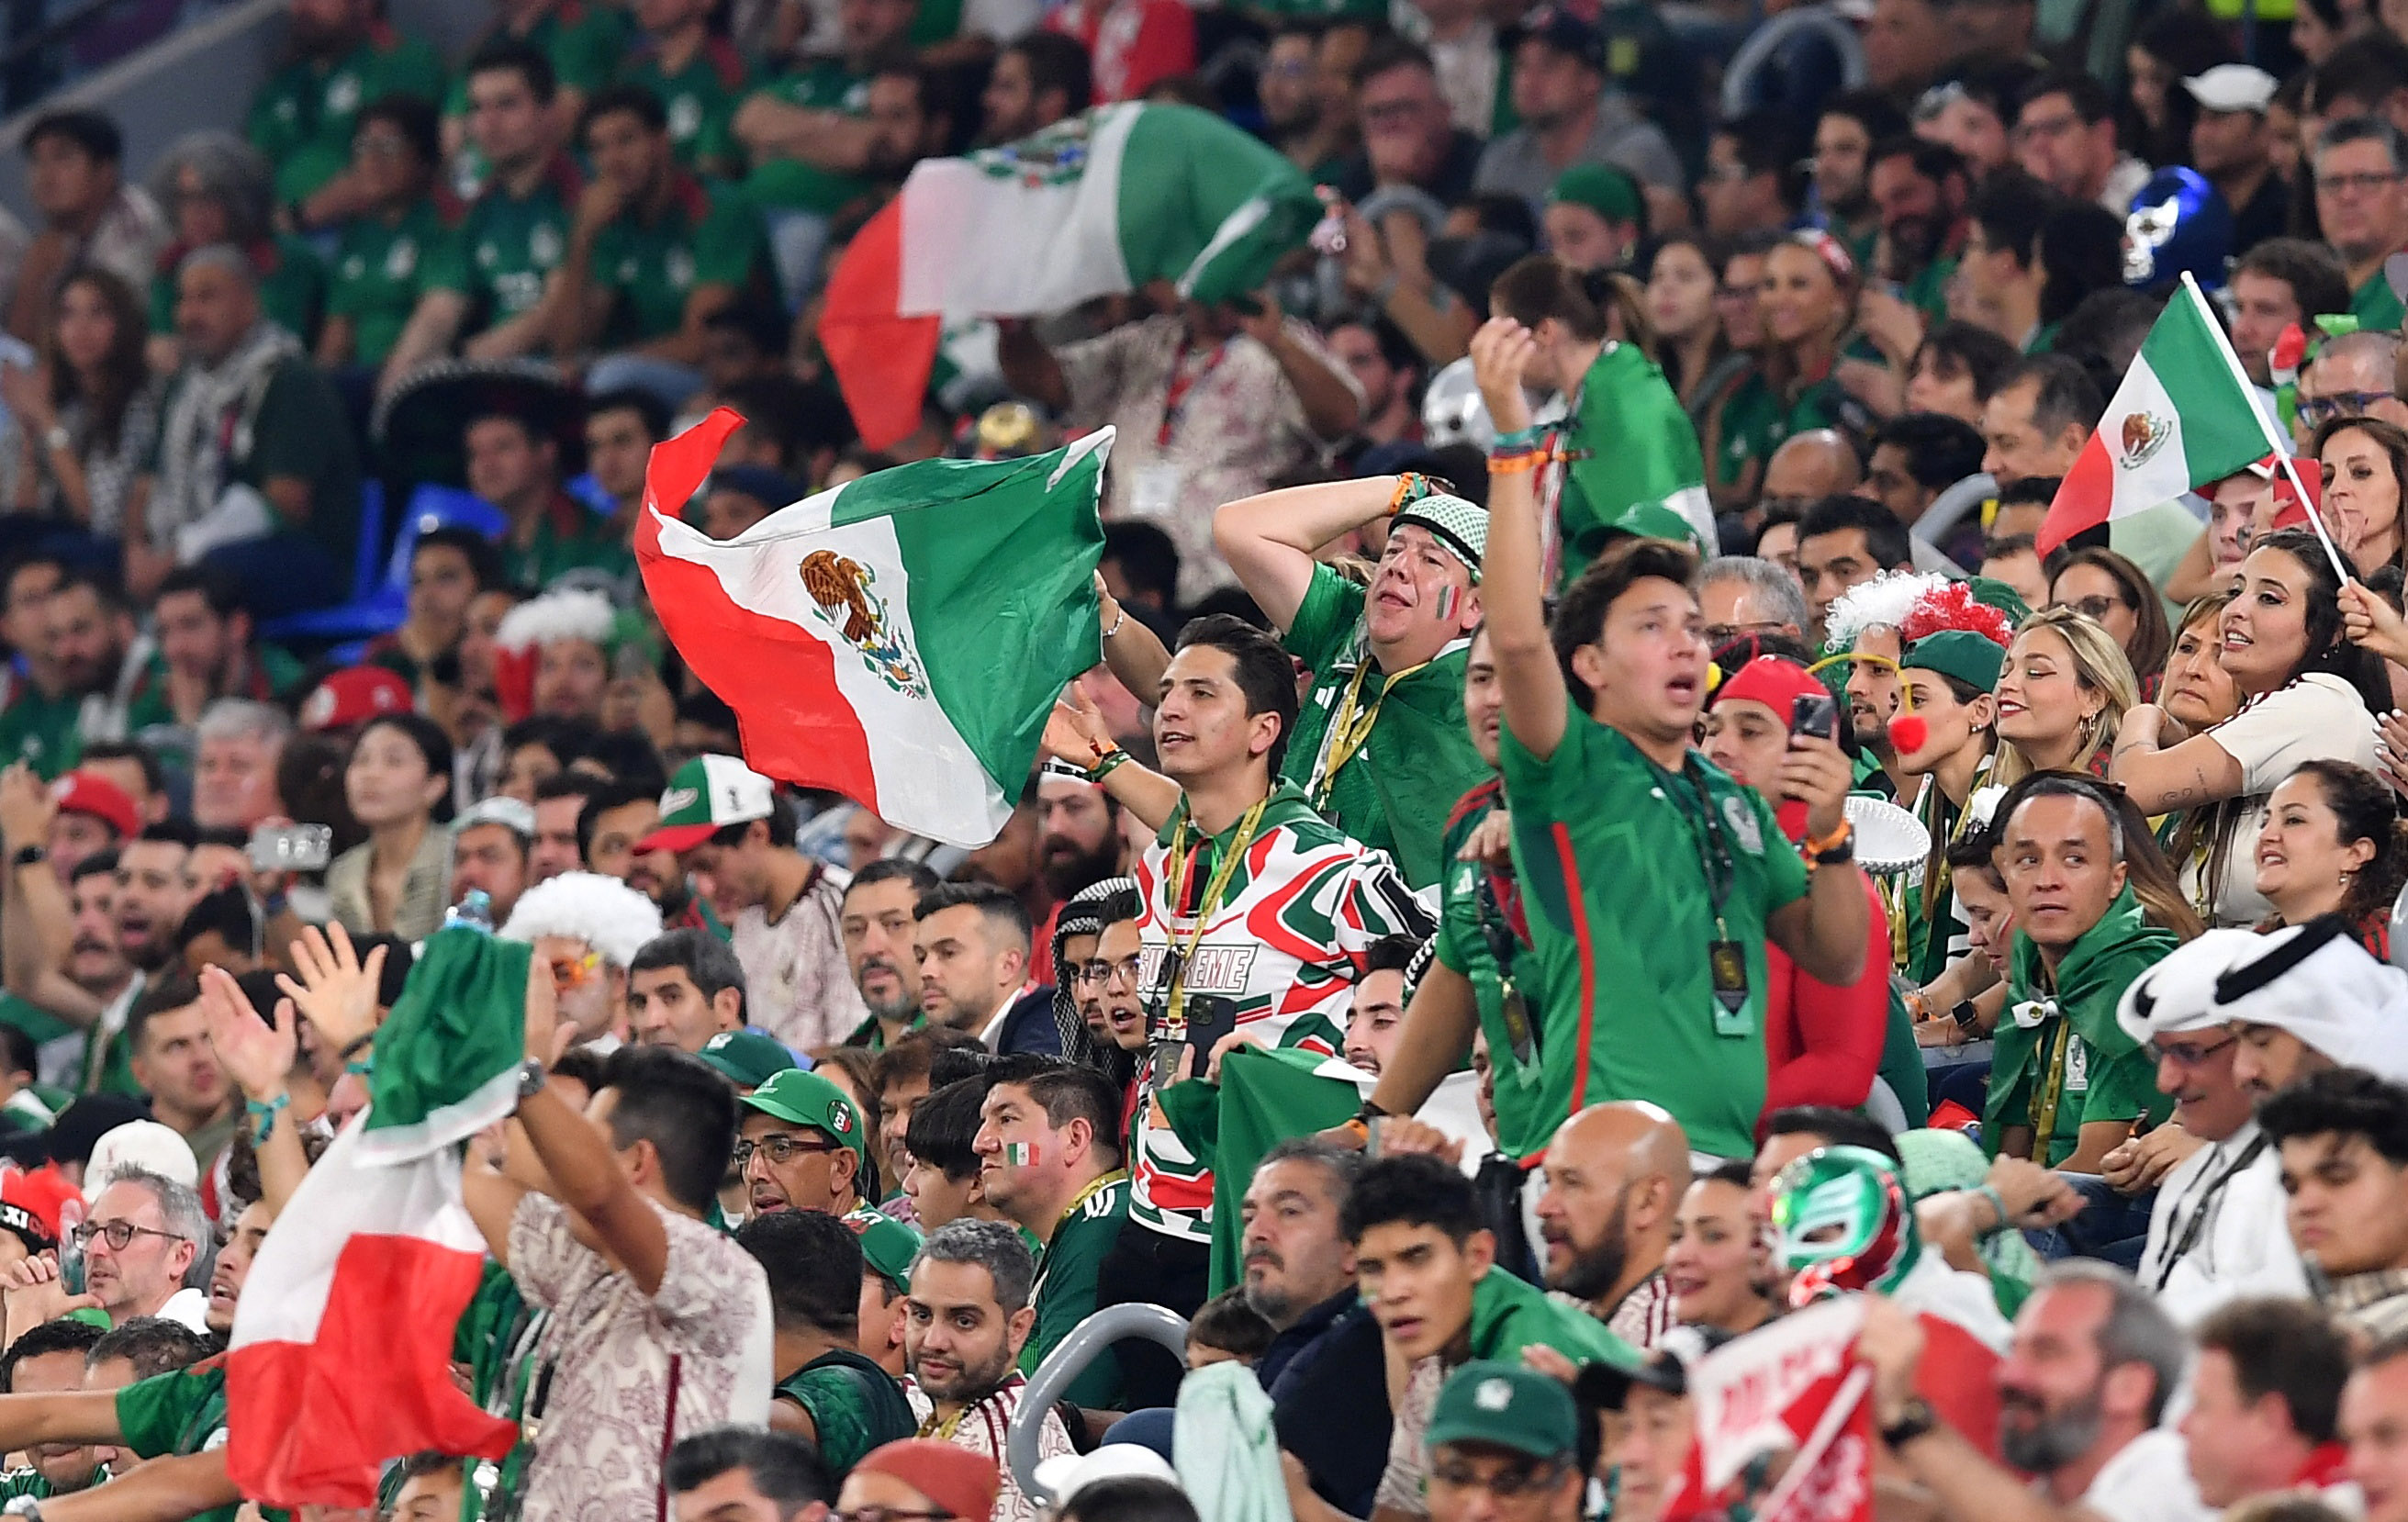 Soccer Football - FIFA World Cup Qatar 2022 - Group C - Mexico v Poland - Stadium 974, Doha, Qatar - November 22, 2022 Mexico fans in the stands REUTERS/Jennifer Lorenzini